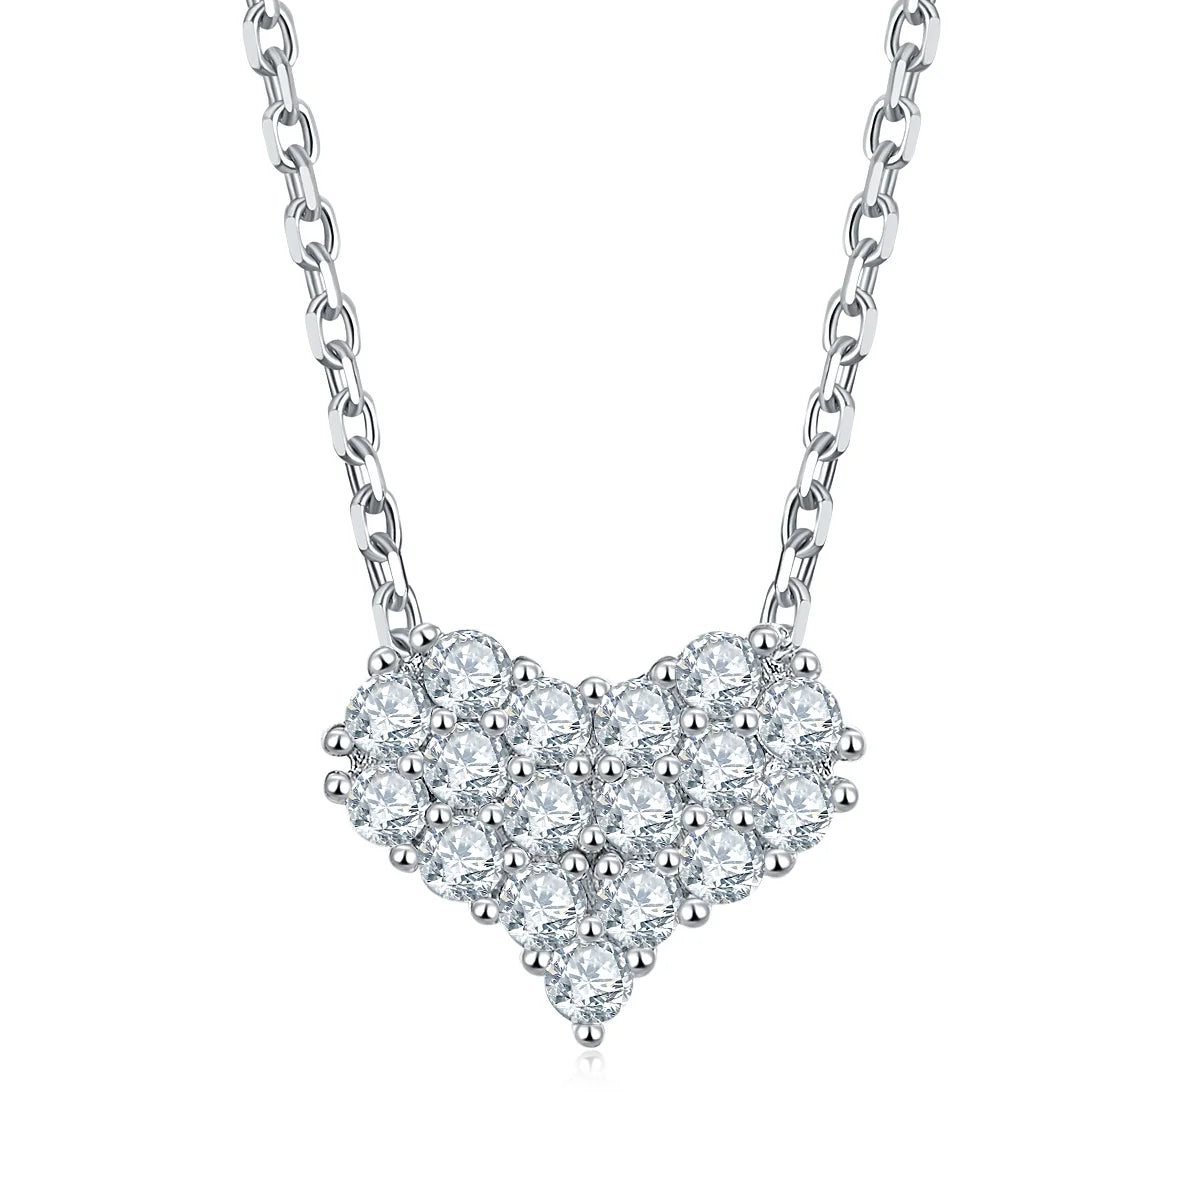 GEM'S BALLET 925 Sterling Silver Bridal Jewelry Set Moissanite Diamond Heart Pendant Necklace Earrings For Women Valentines Gift Pendant CHINA